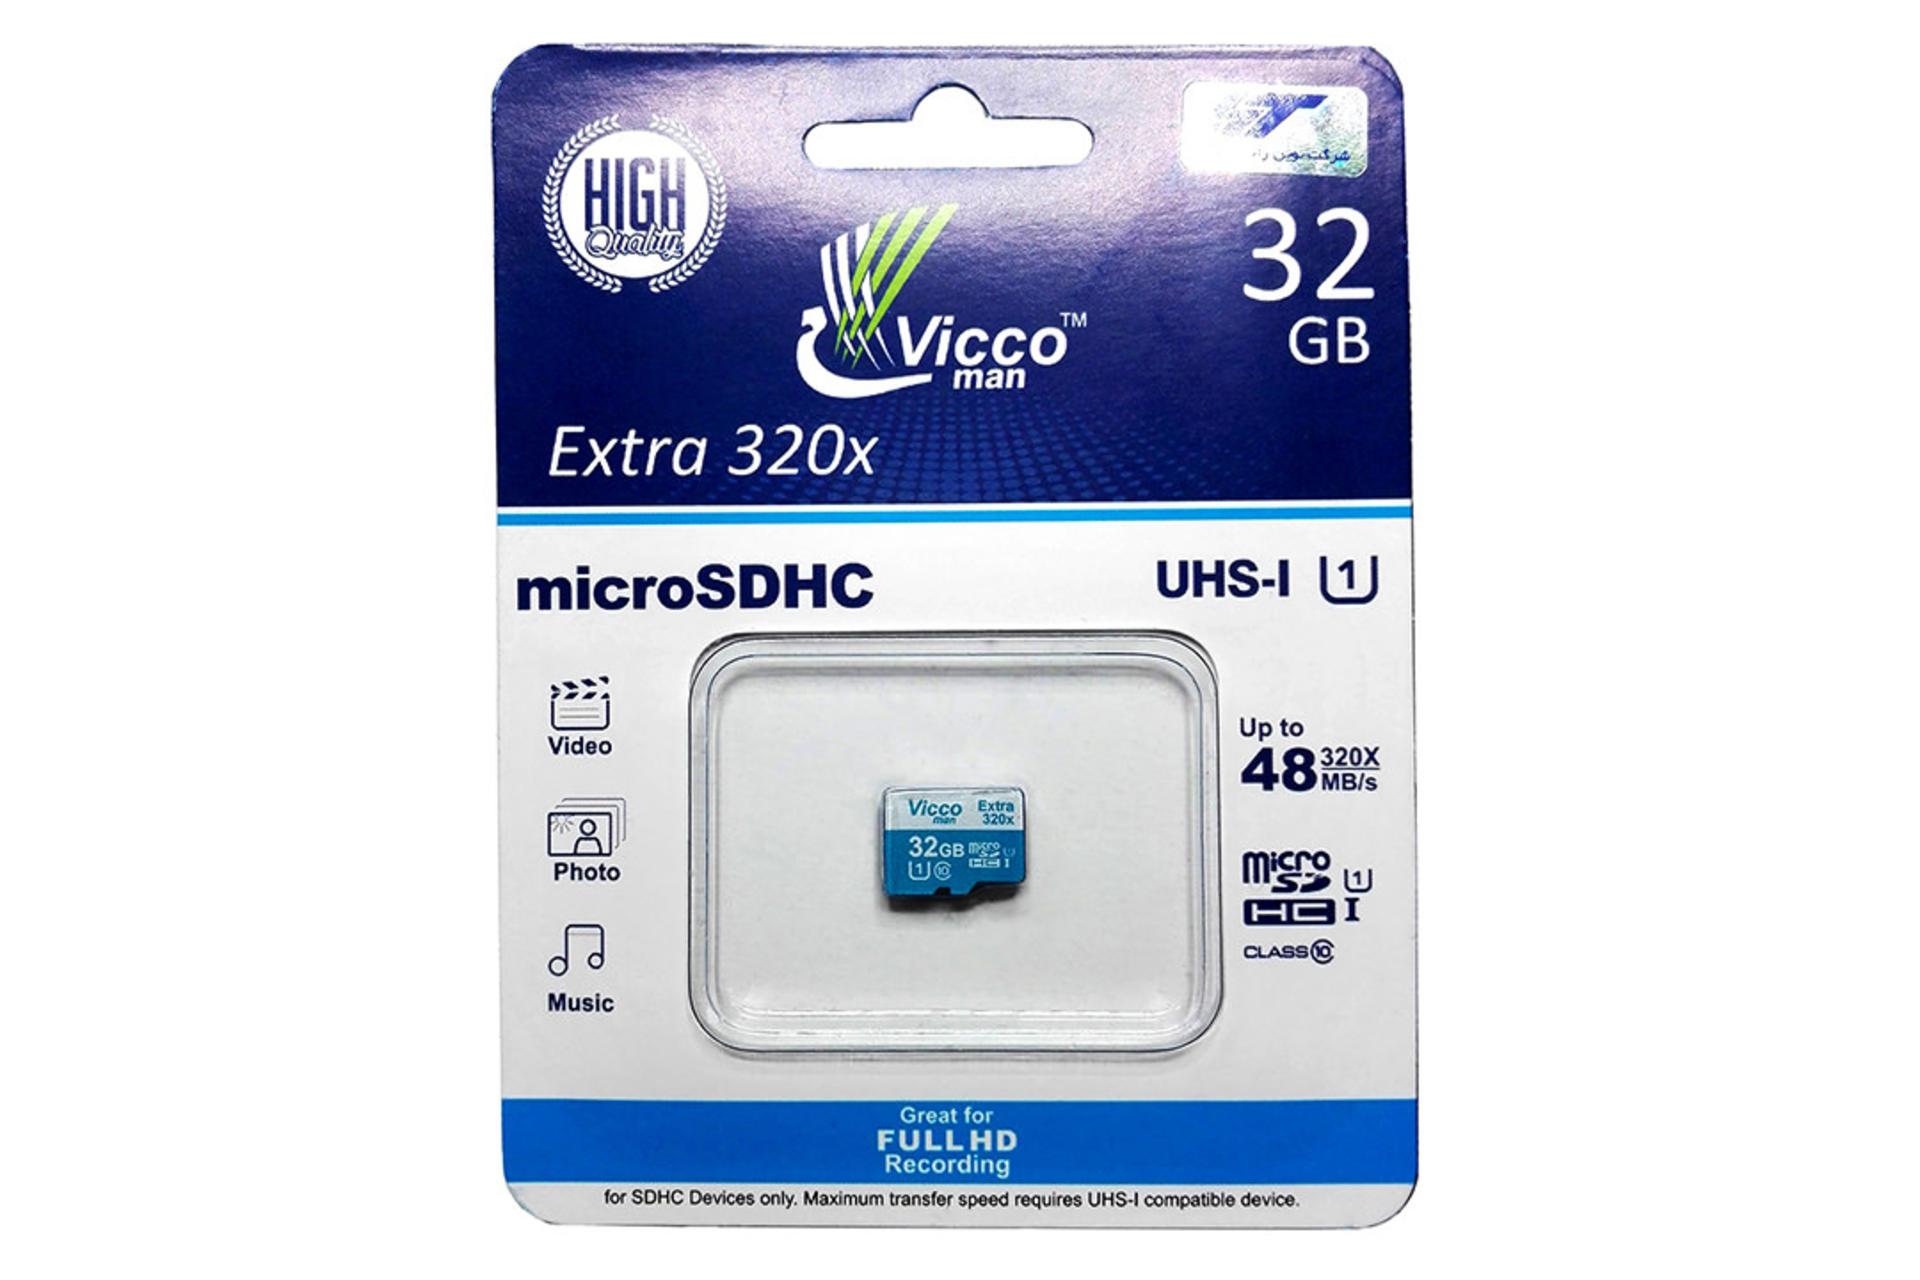 Viccoman Extra 320x microSDHC Class 10 UHS-I U1 32GB